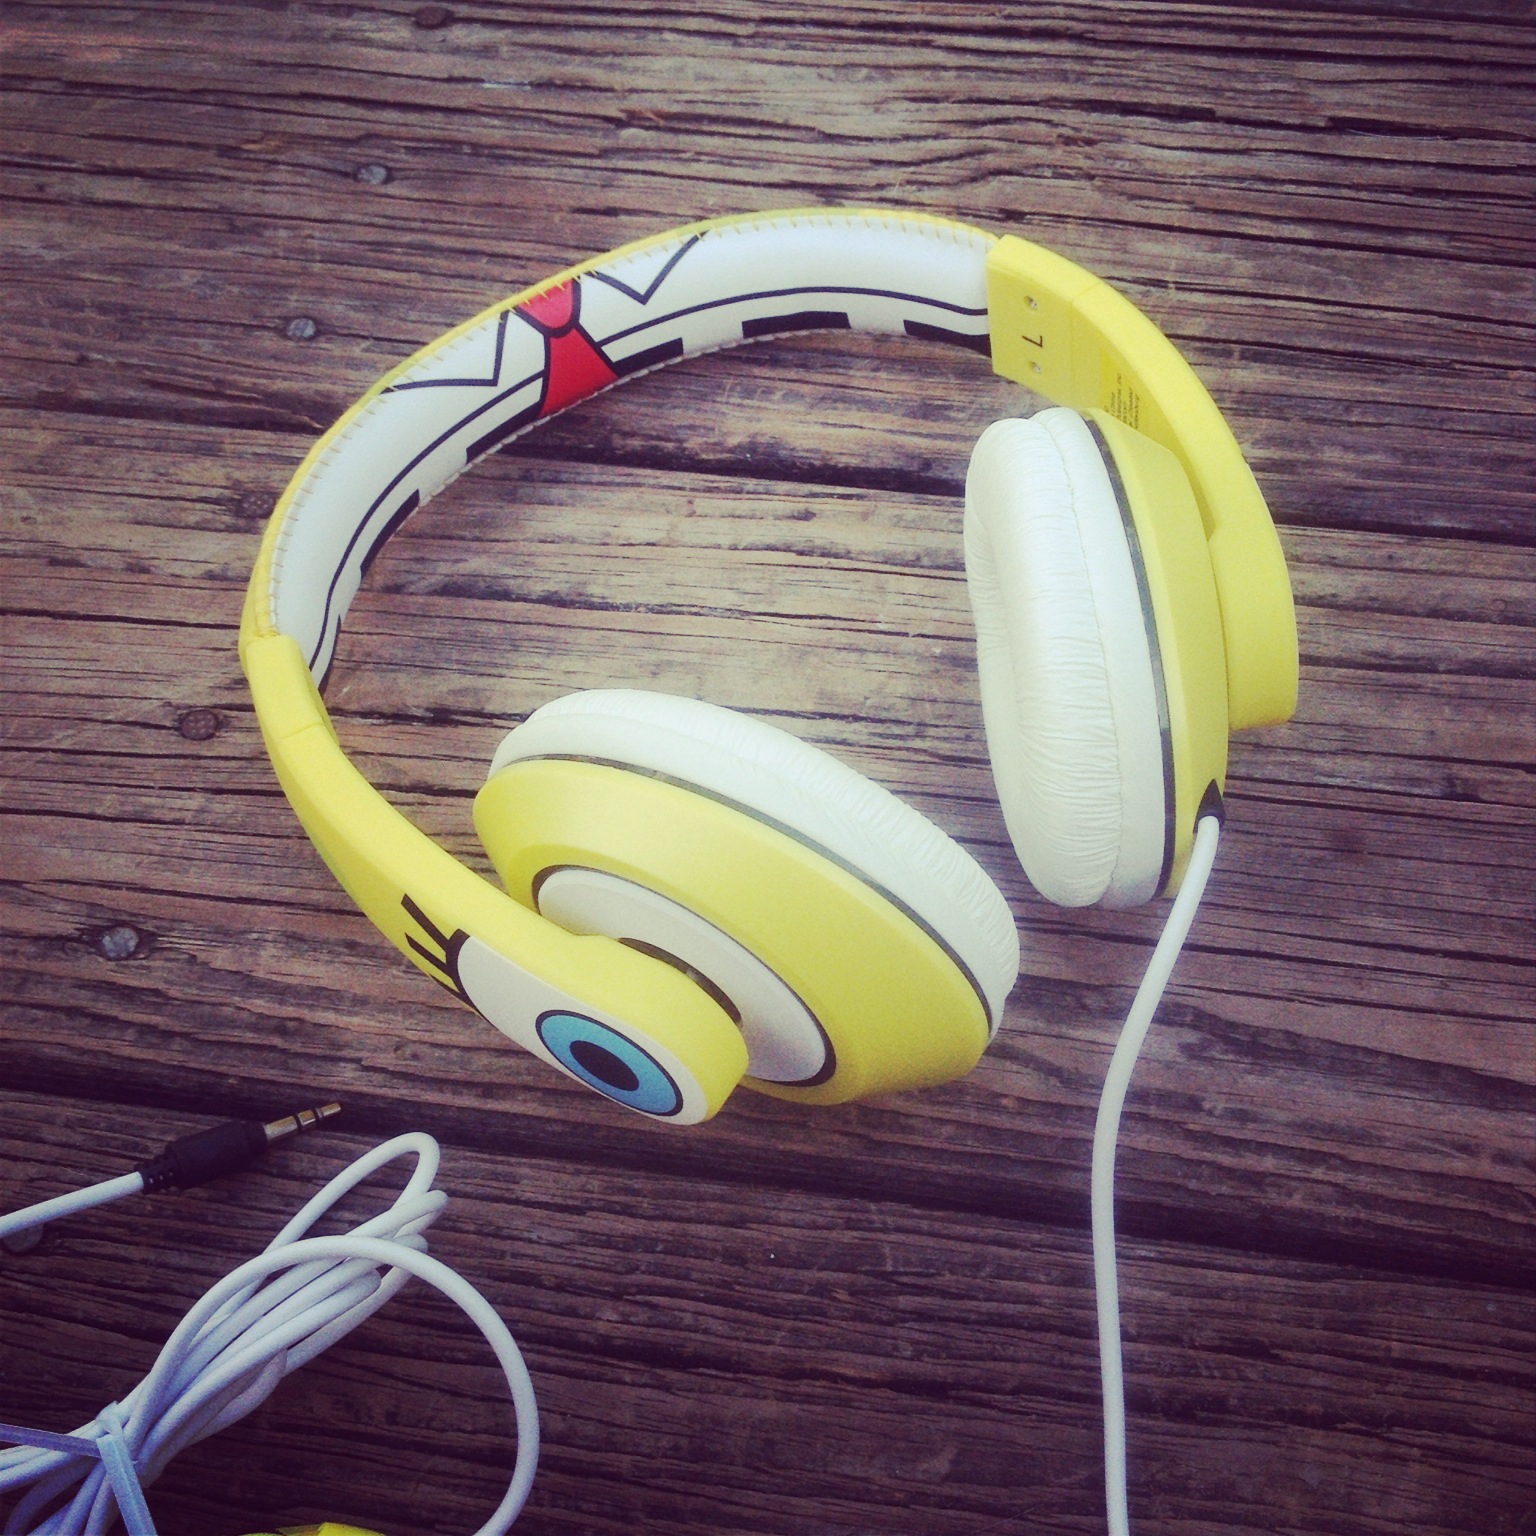 Spongebob Squarepants Over the Ear Headphones